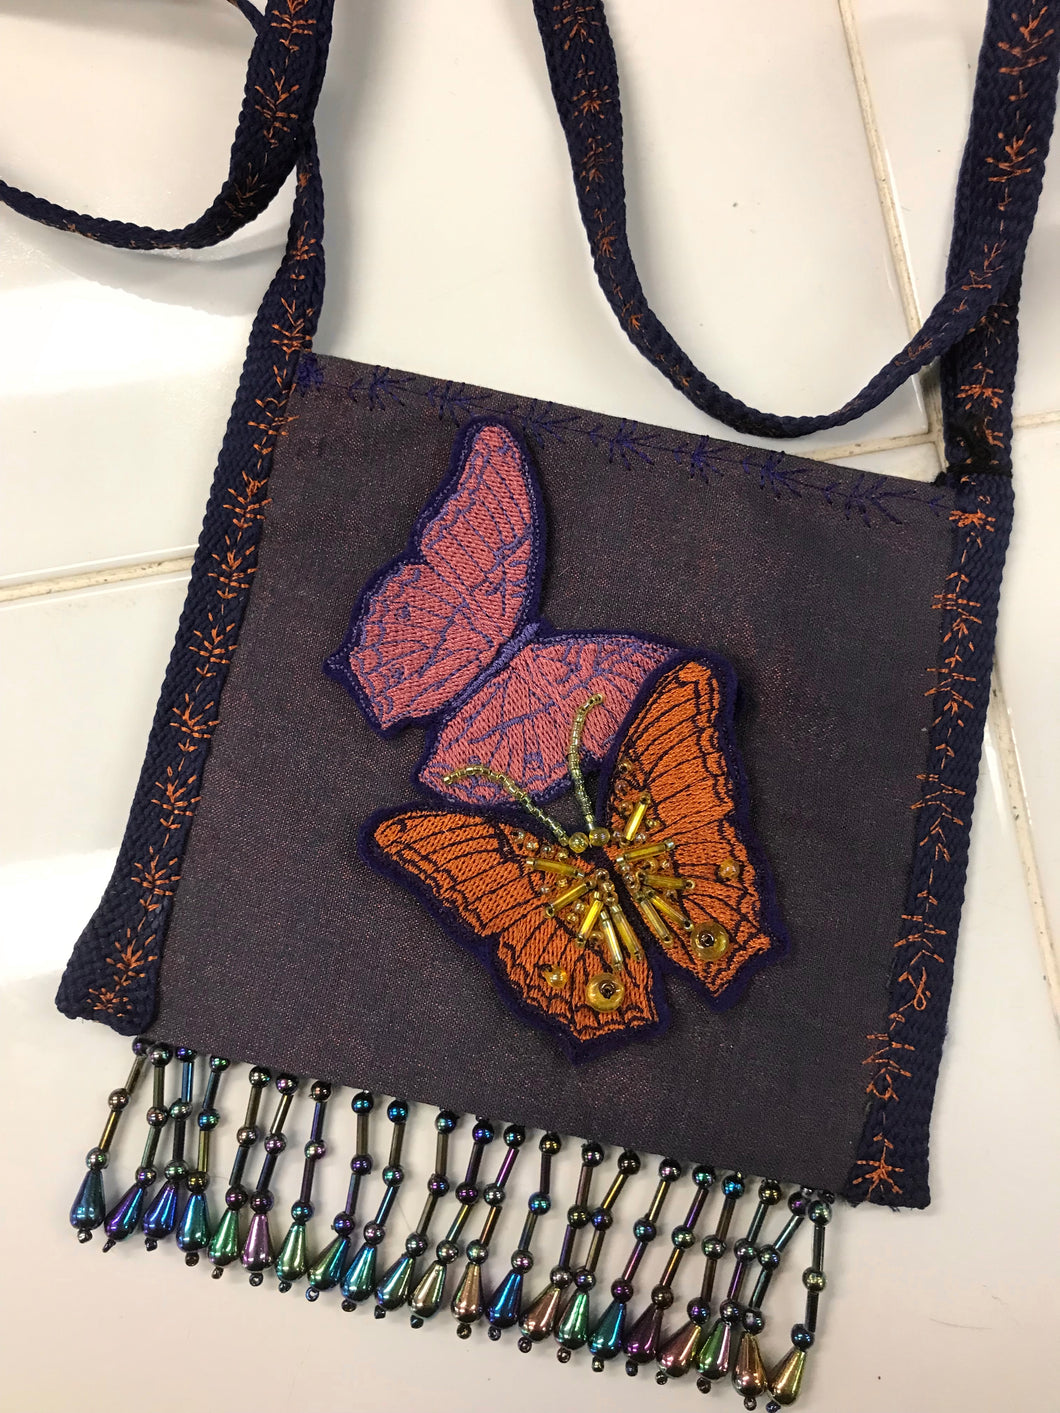 Butterfly Bag: Two butterflies